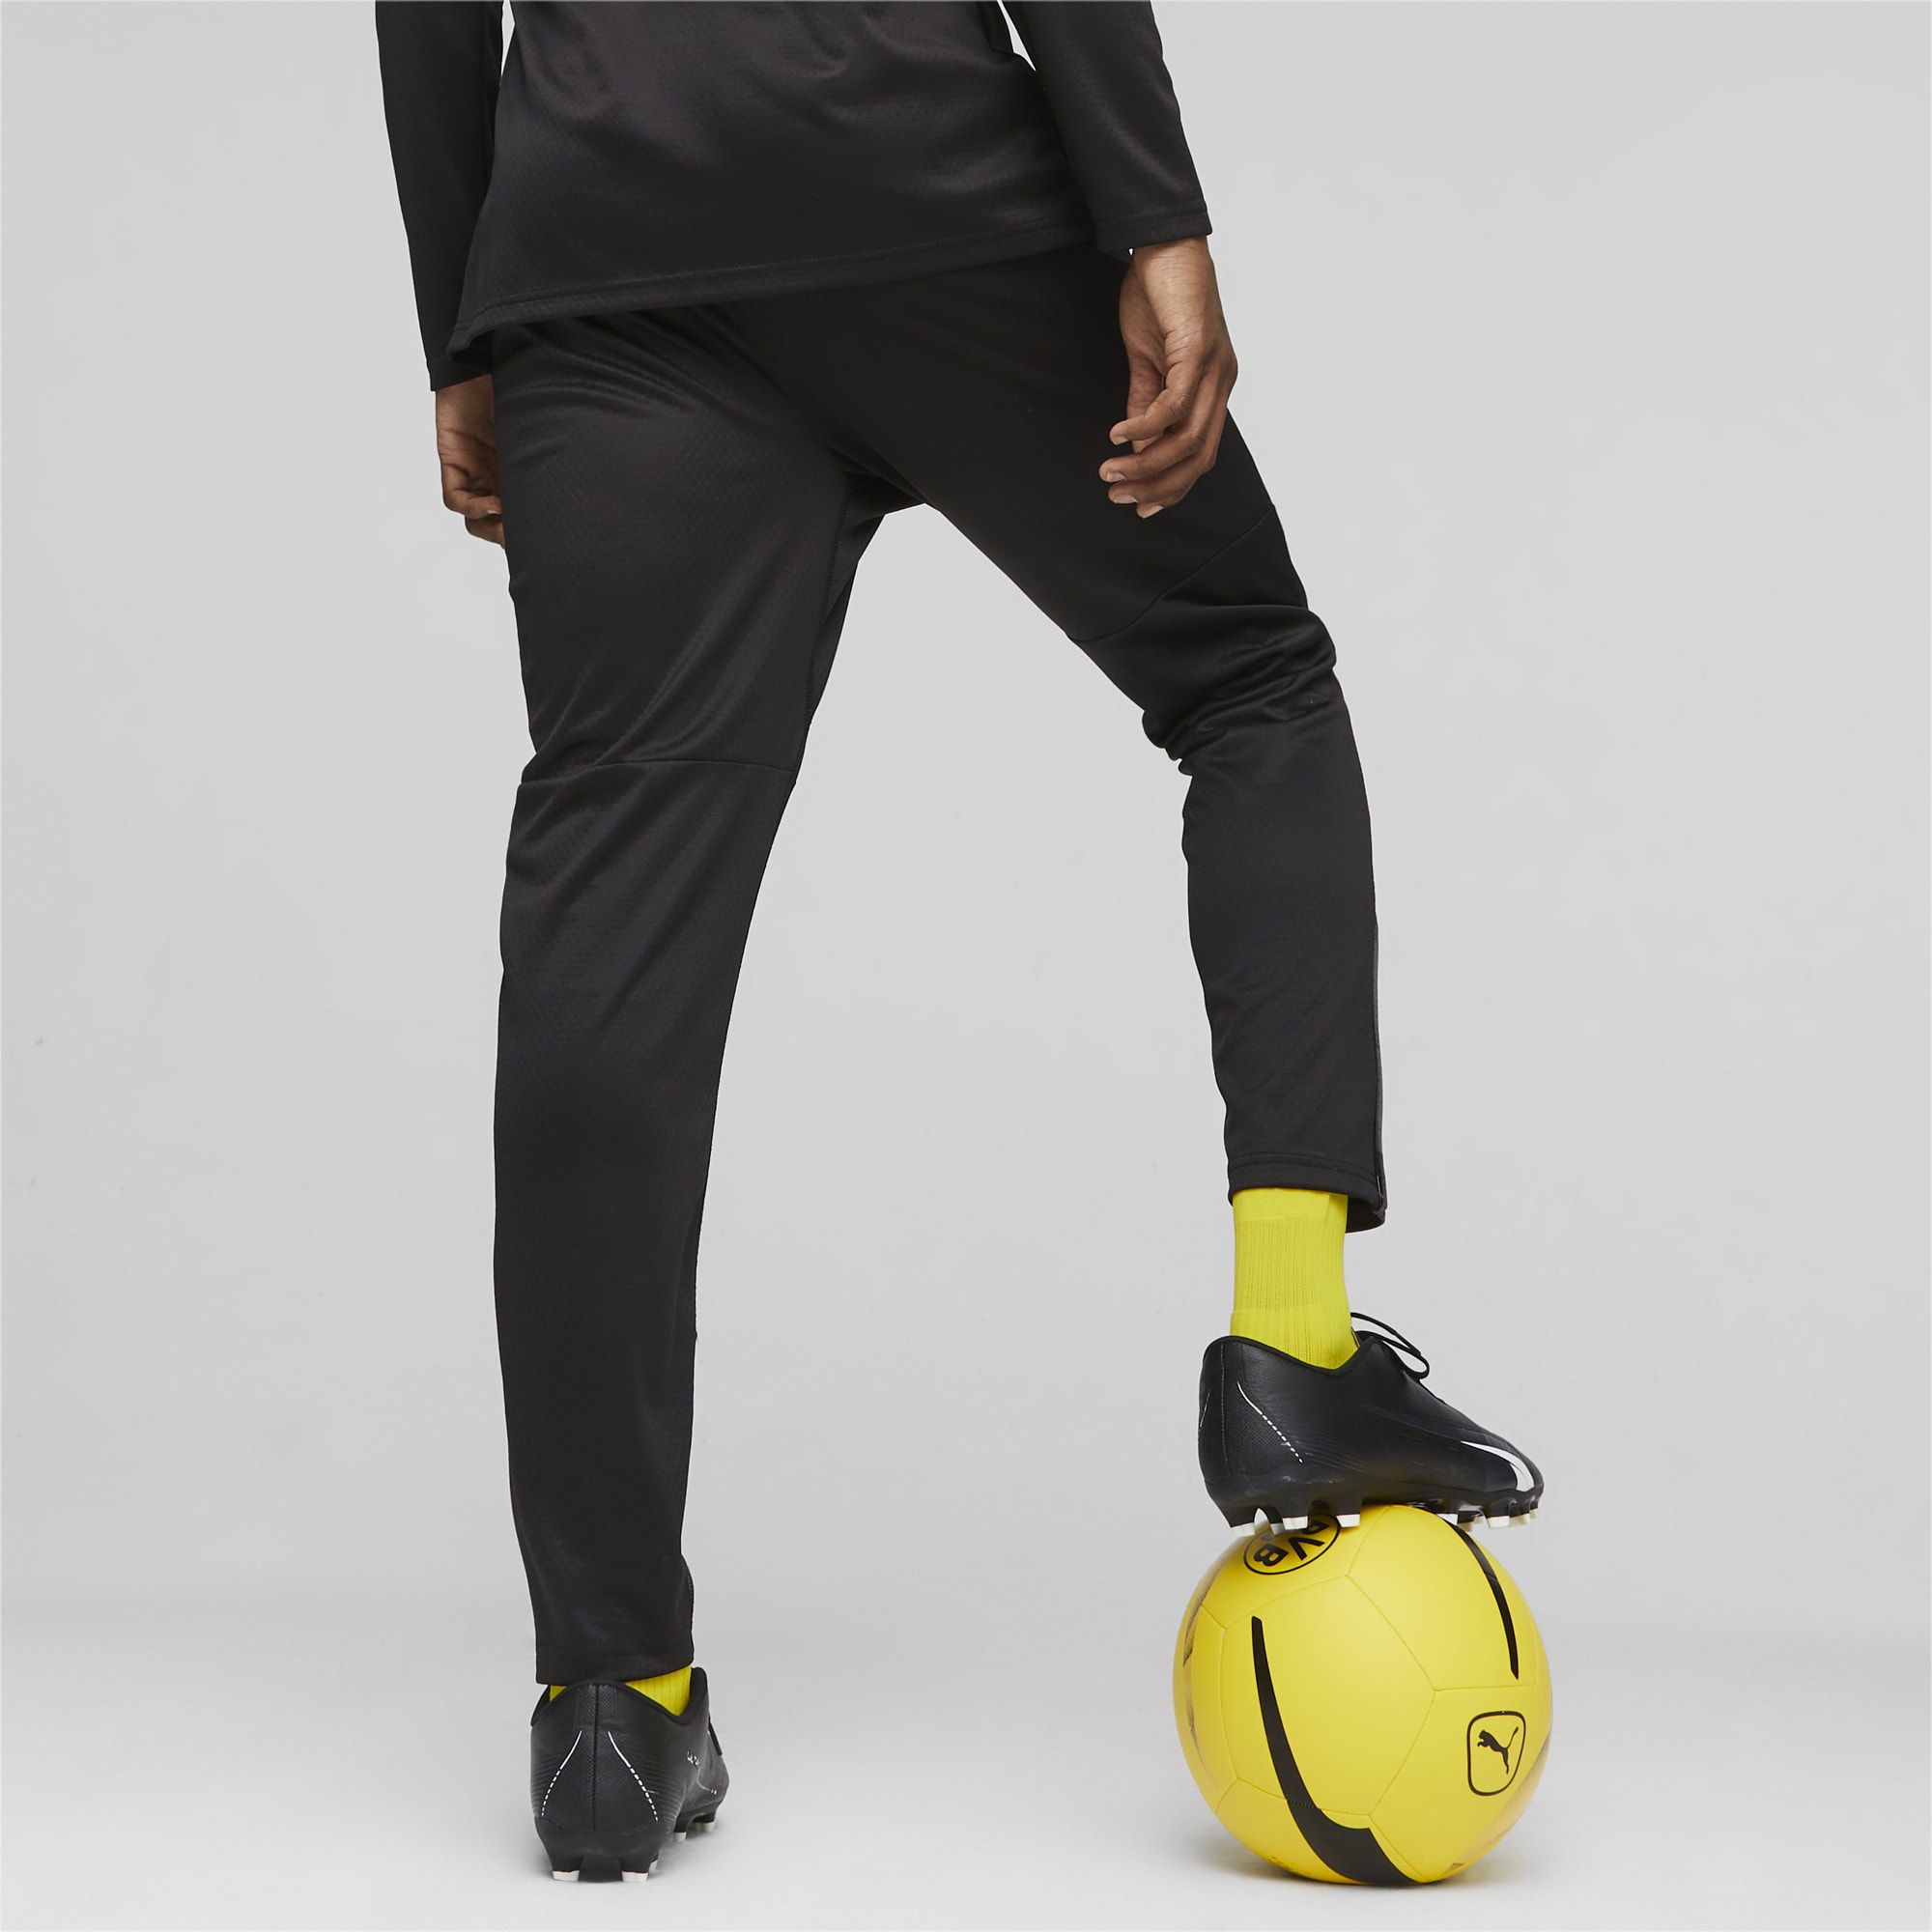 Men's PUMA Borussia Dortmund Football Training Pants, Black/Silver, Size L, Clothing